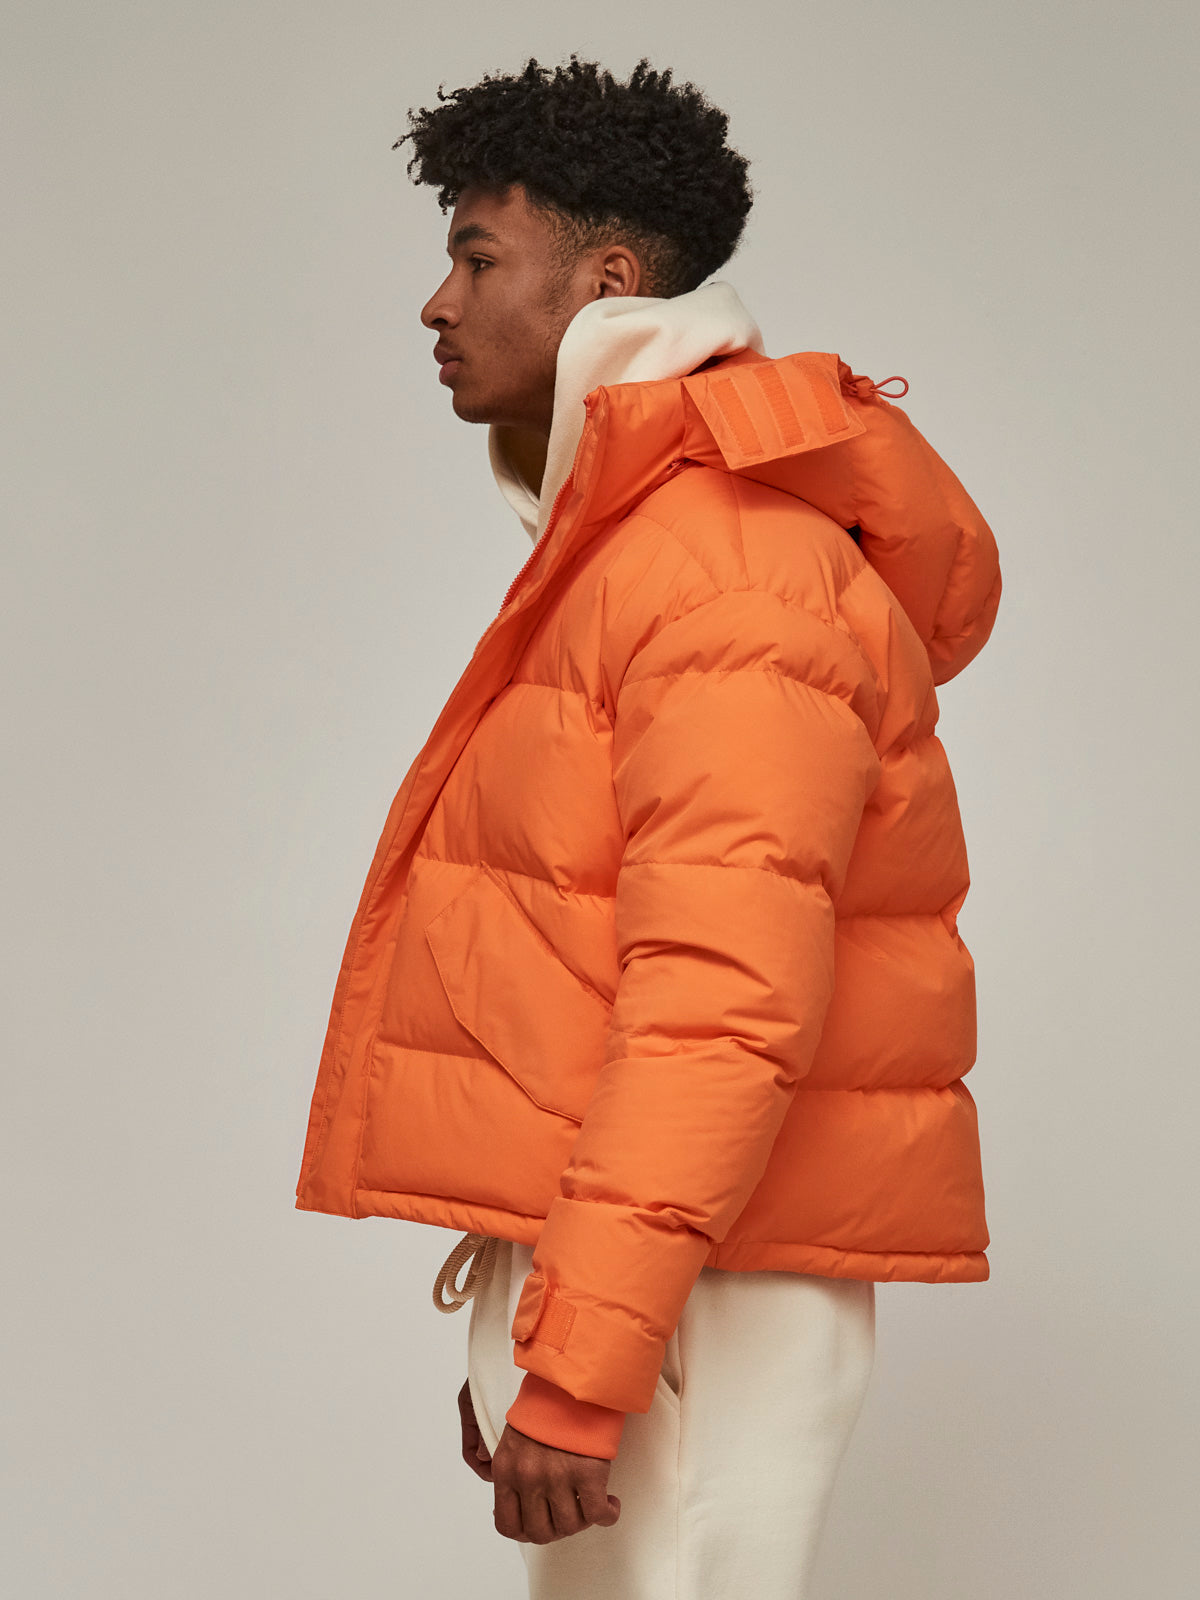 Odd Orange Puffer Jacket/ LMTD edition